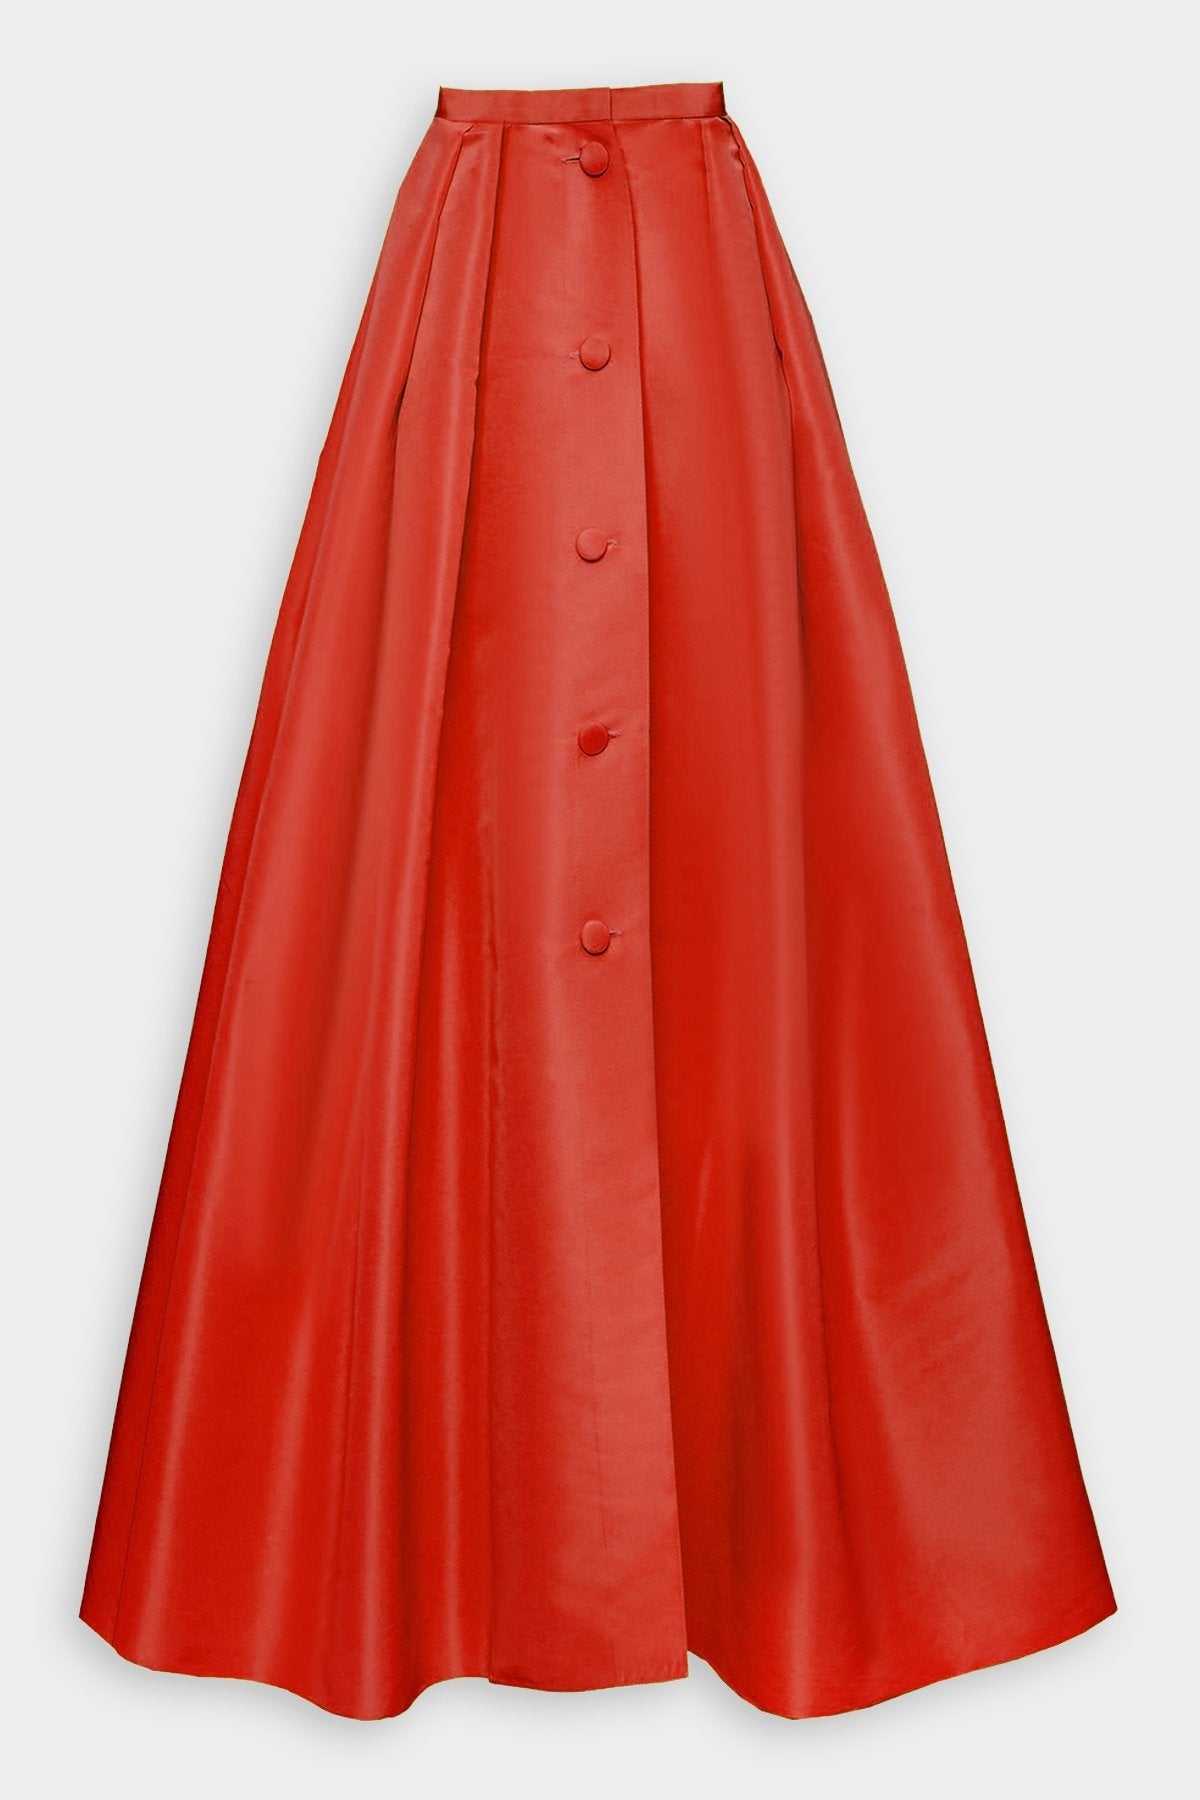 Silk satin maxi skirt in red - The Sei